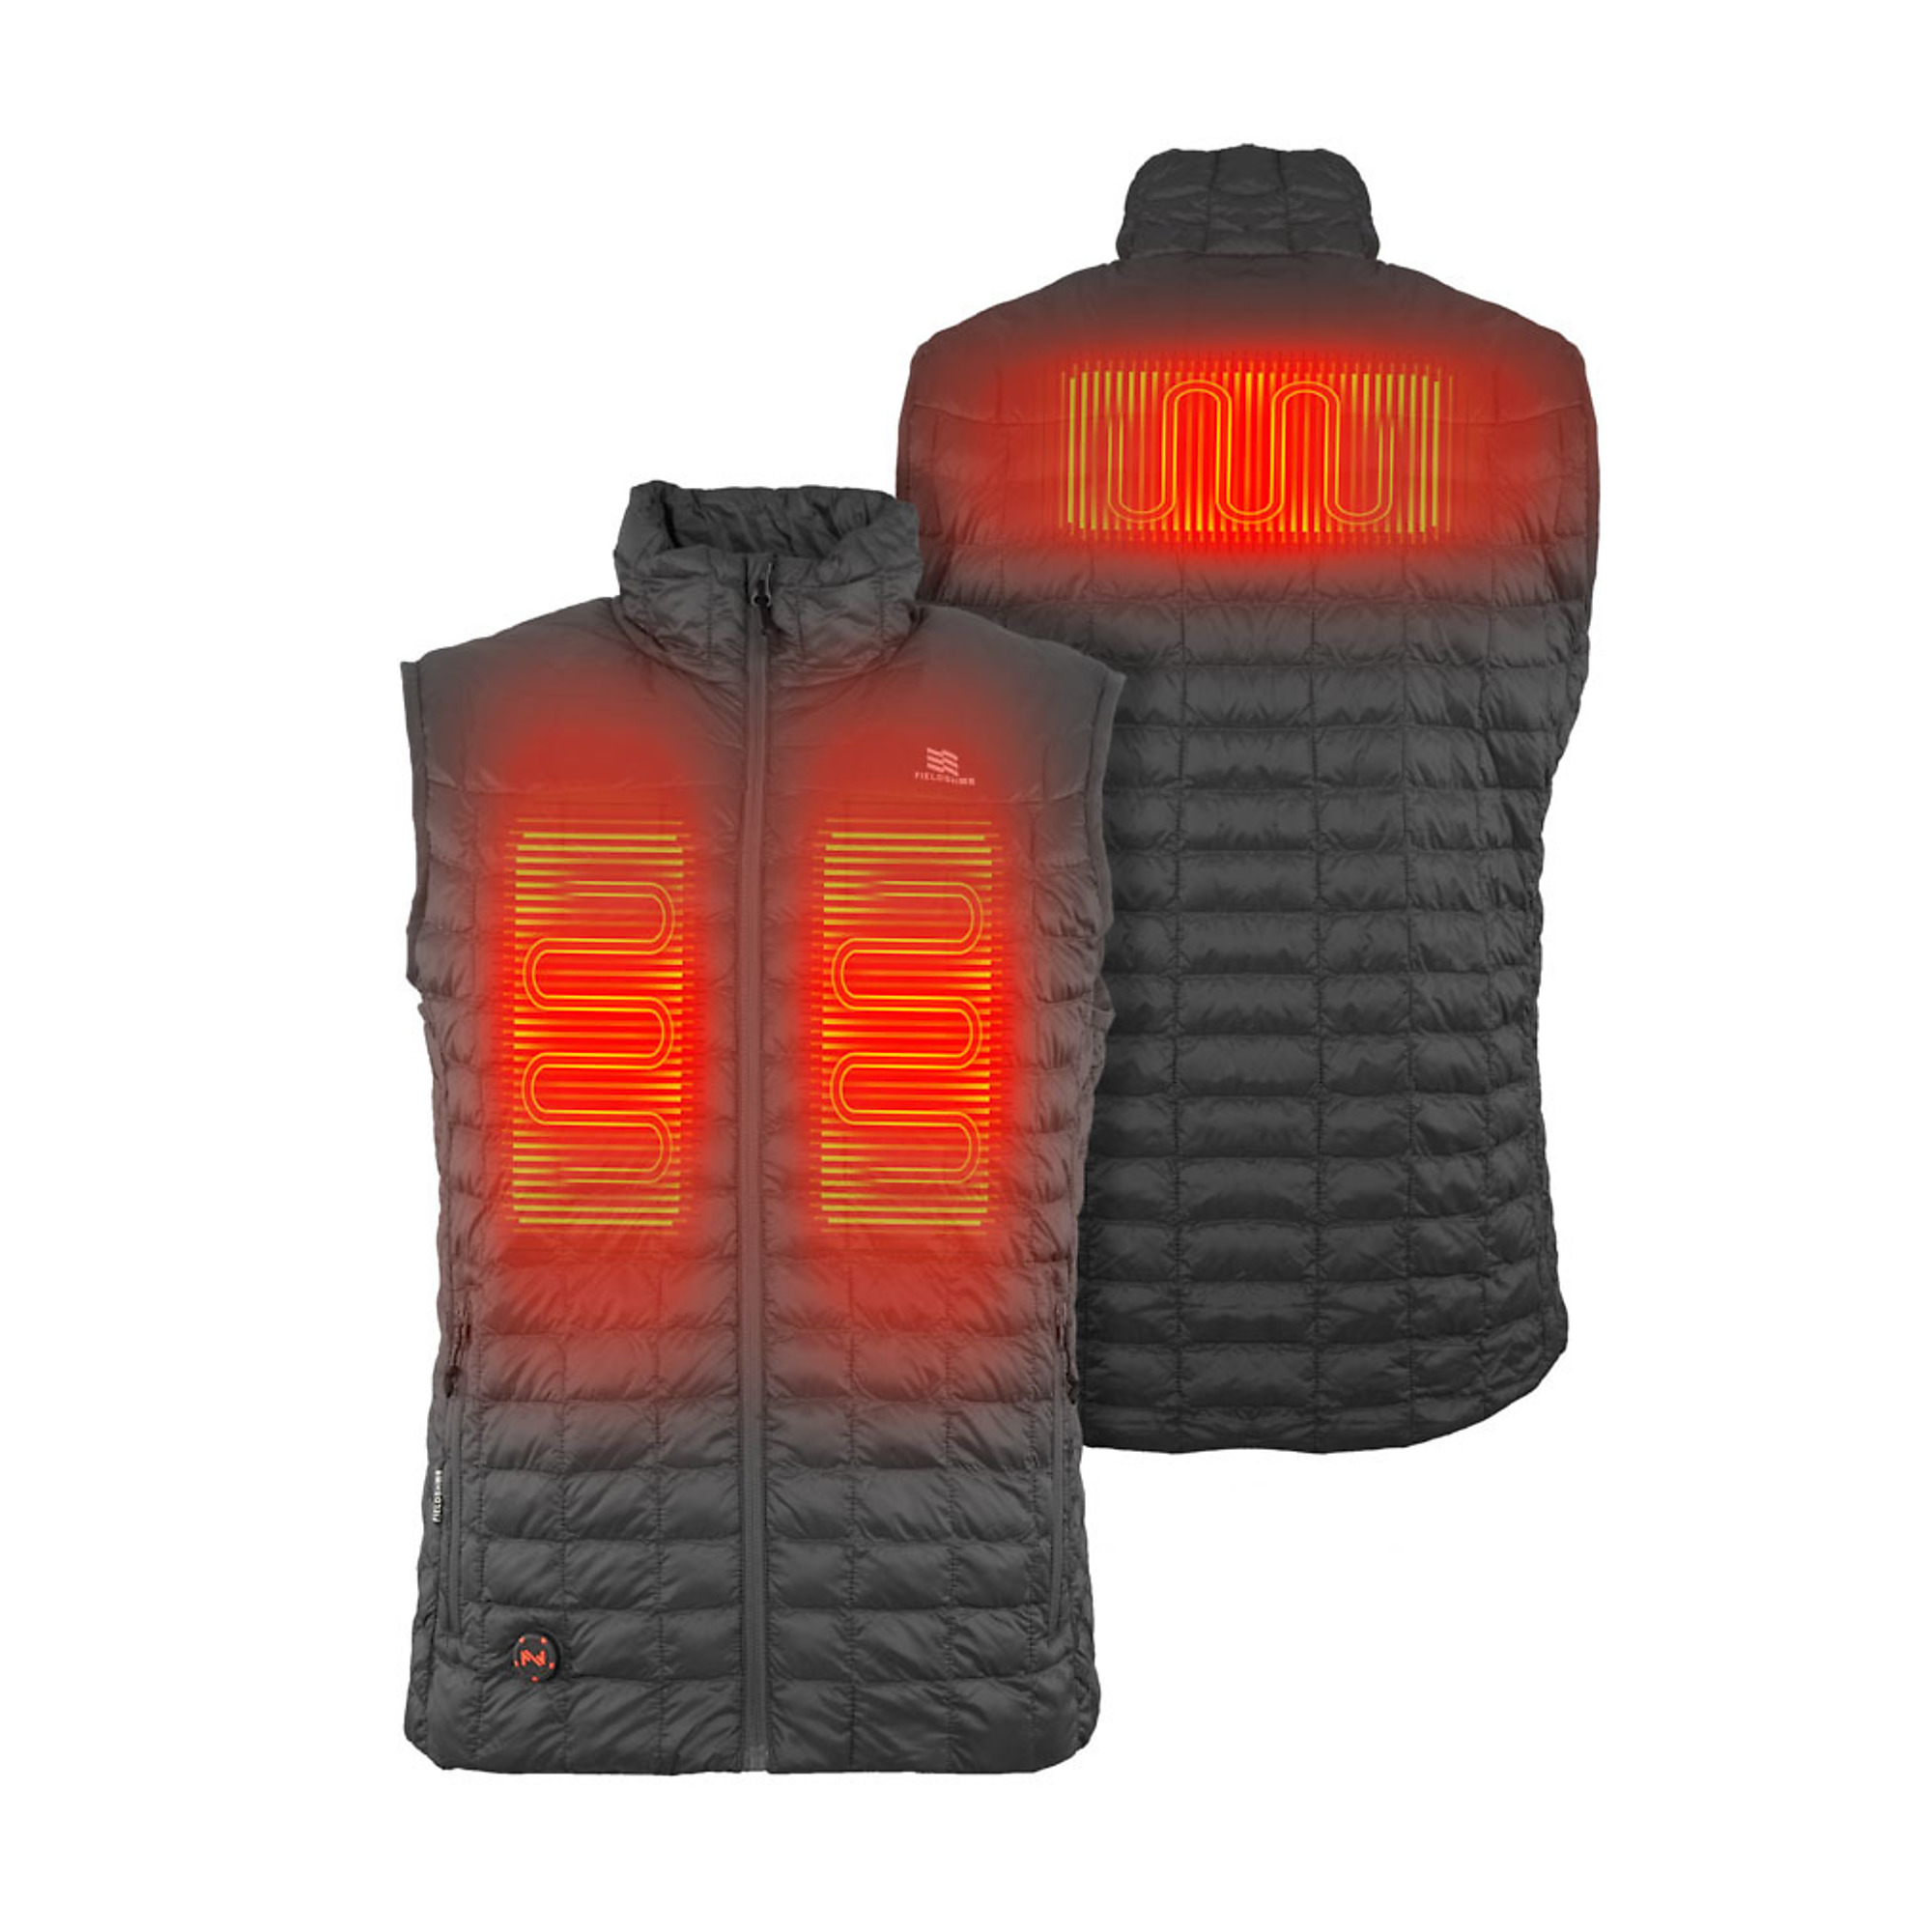 Fieldsheer, Men's Backcountry Heated Vest with 7.4v Battery, Size 2XL, Color Black, Model MWMV04010620